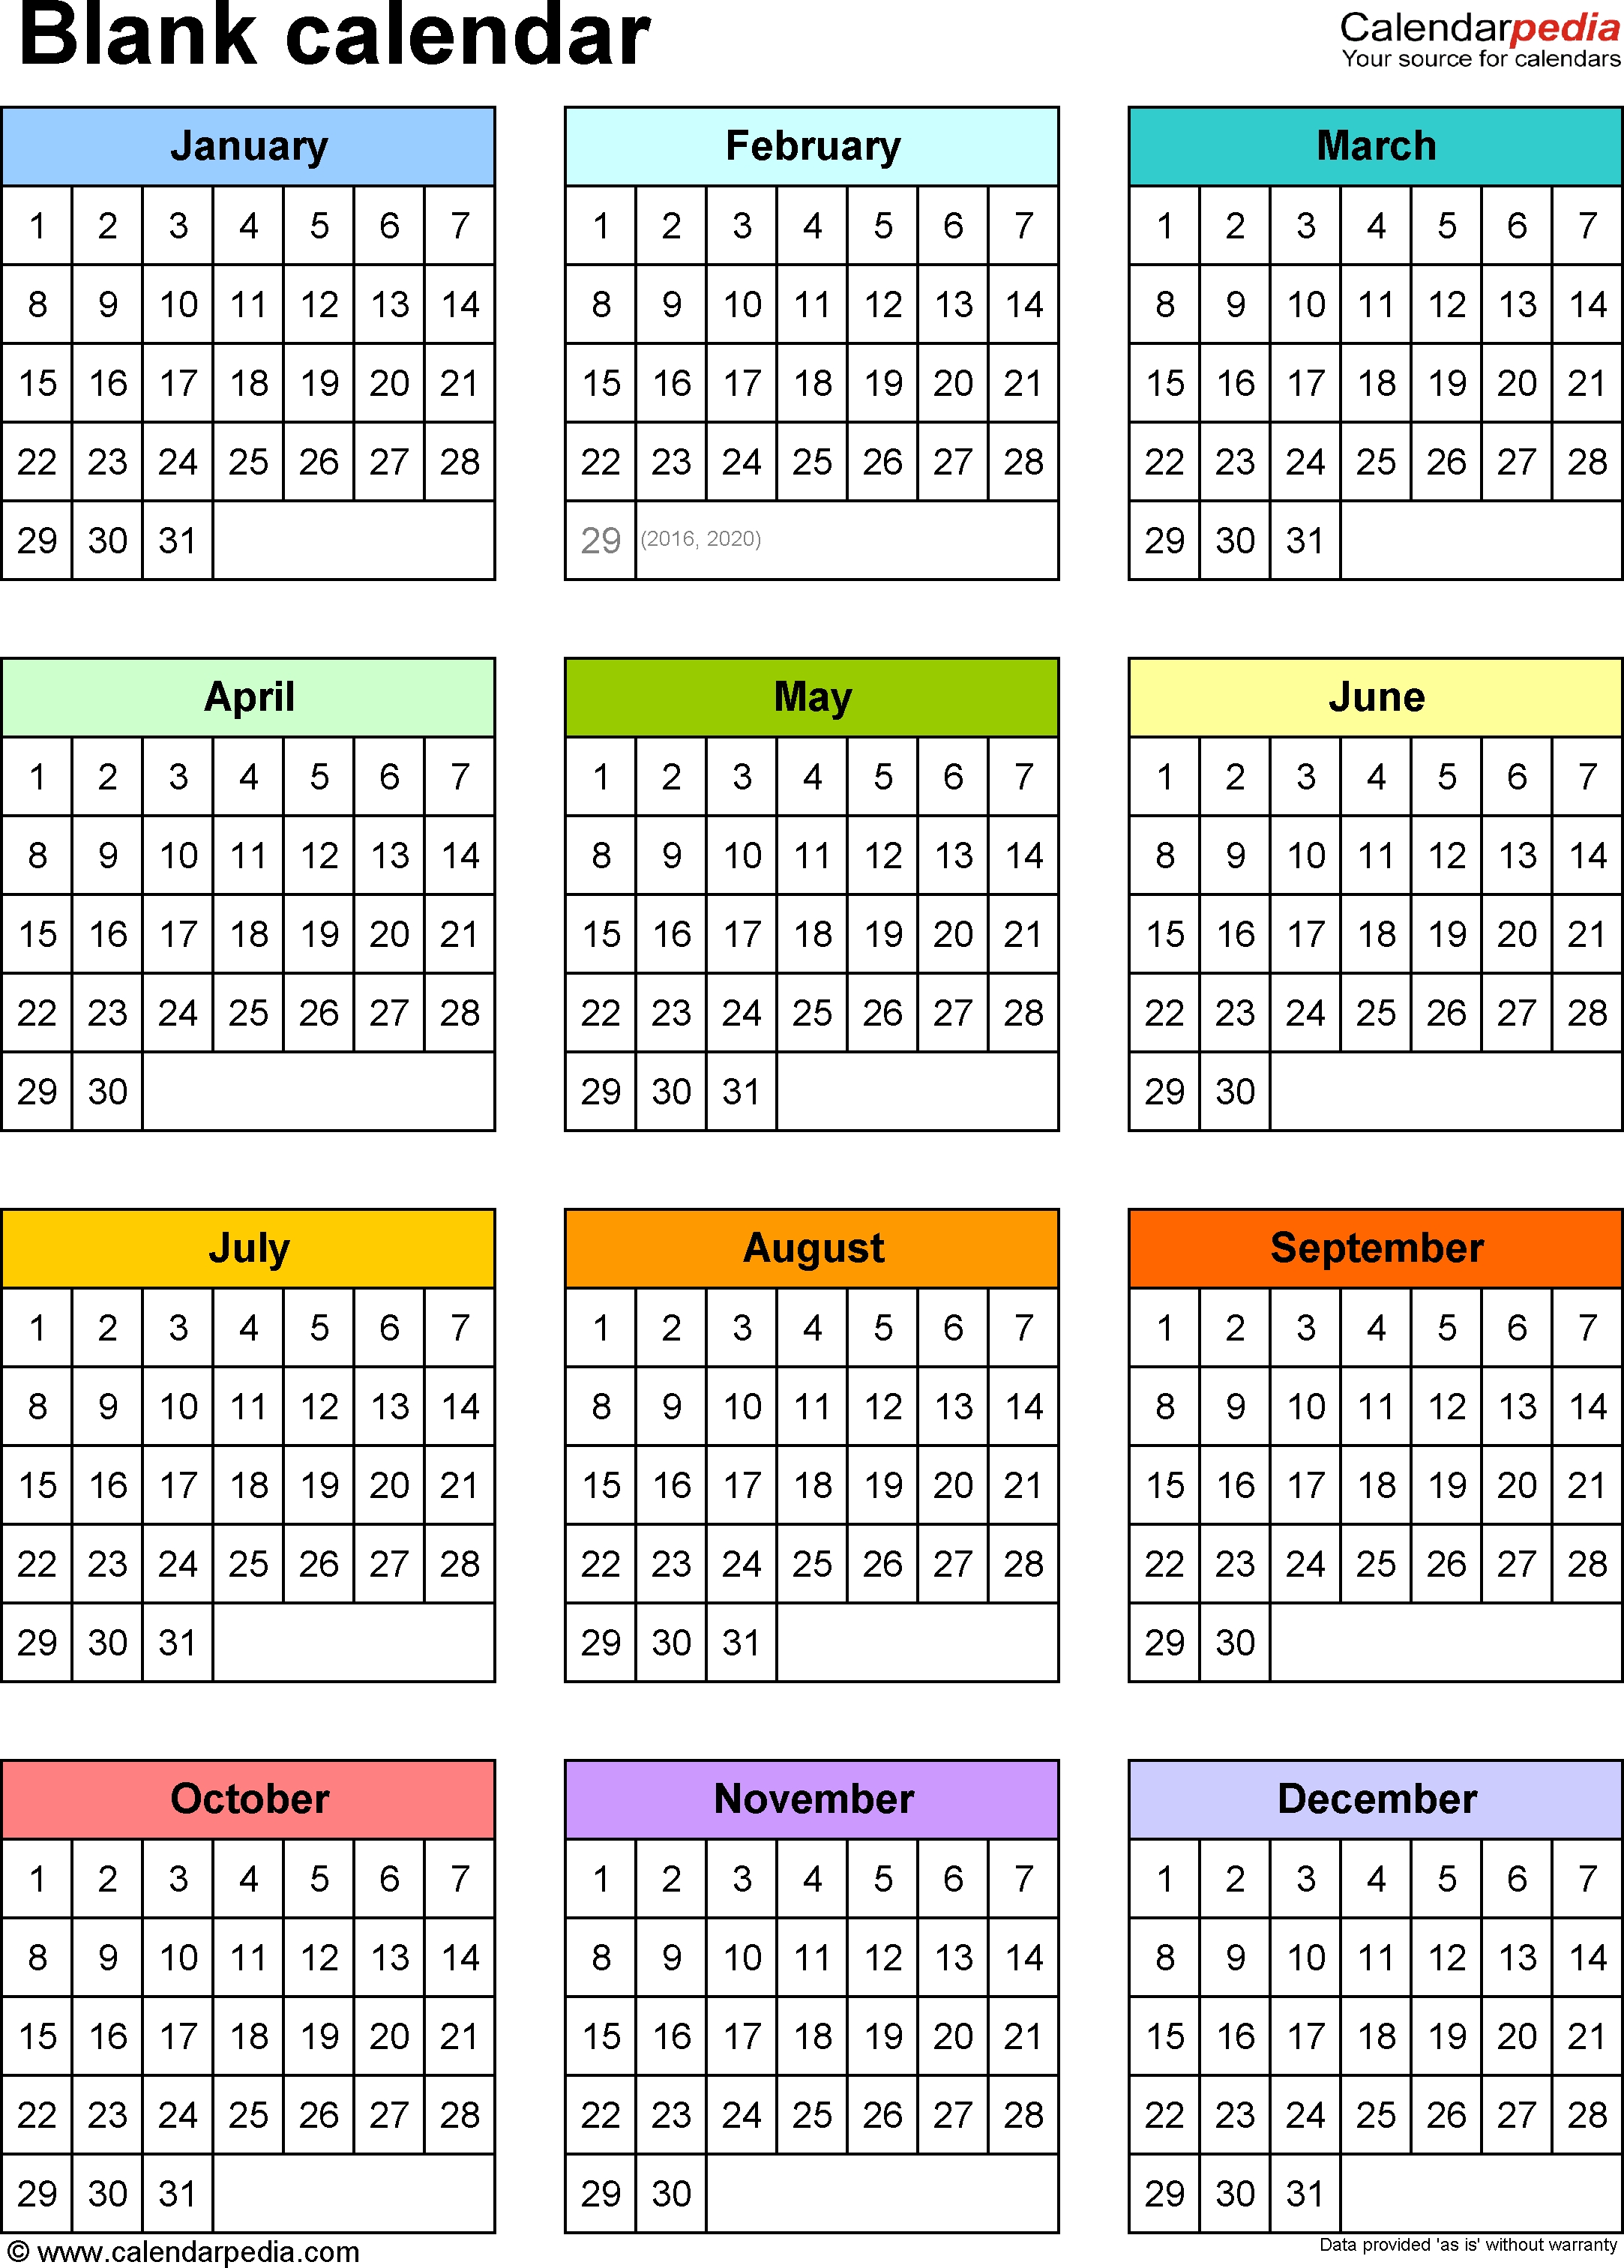 Blank Calendar - 9 Free Printable Microsoft Word Templates throughout 1 Page 9 Month Calendar